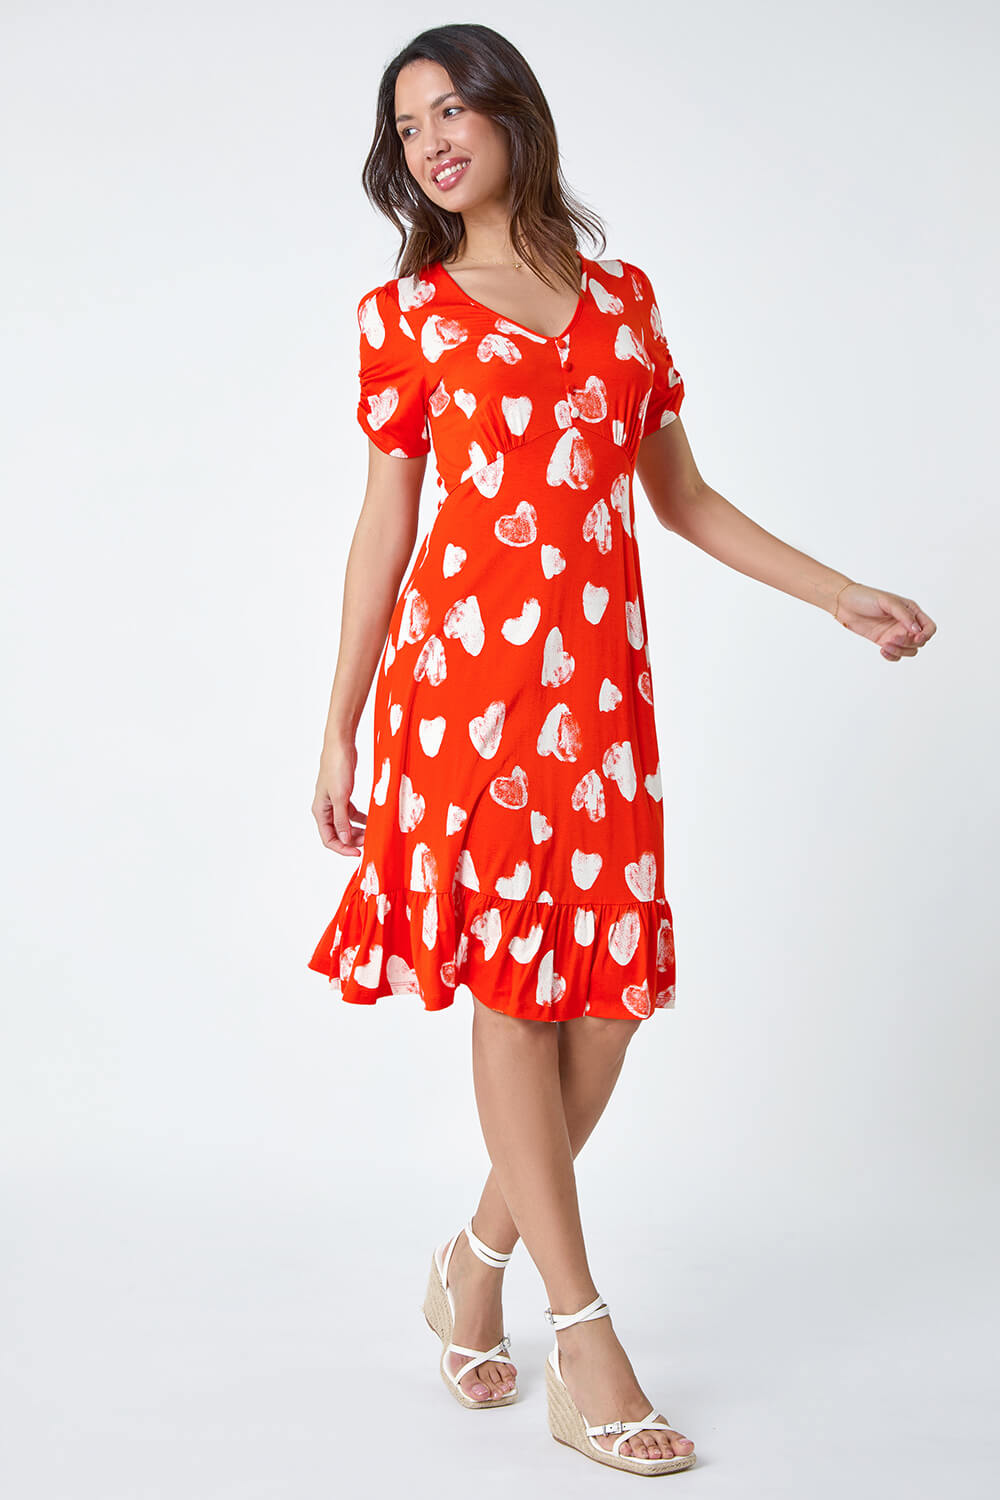 Red Heart Print Frill Hem Stretch Dress, Image 2 of 5